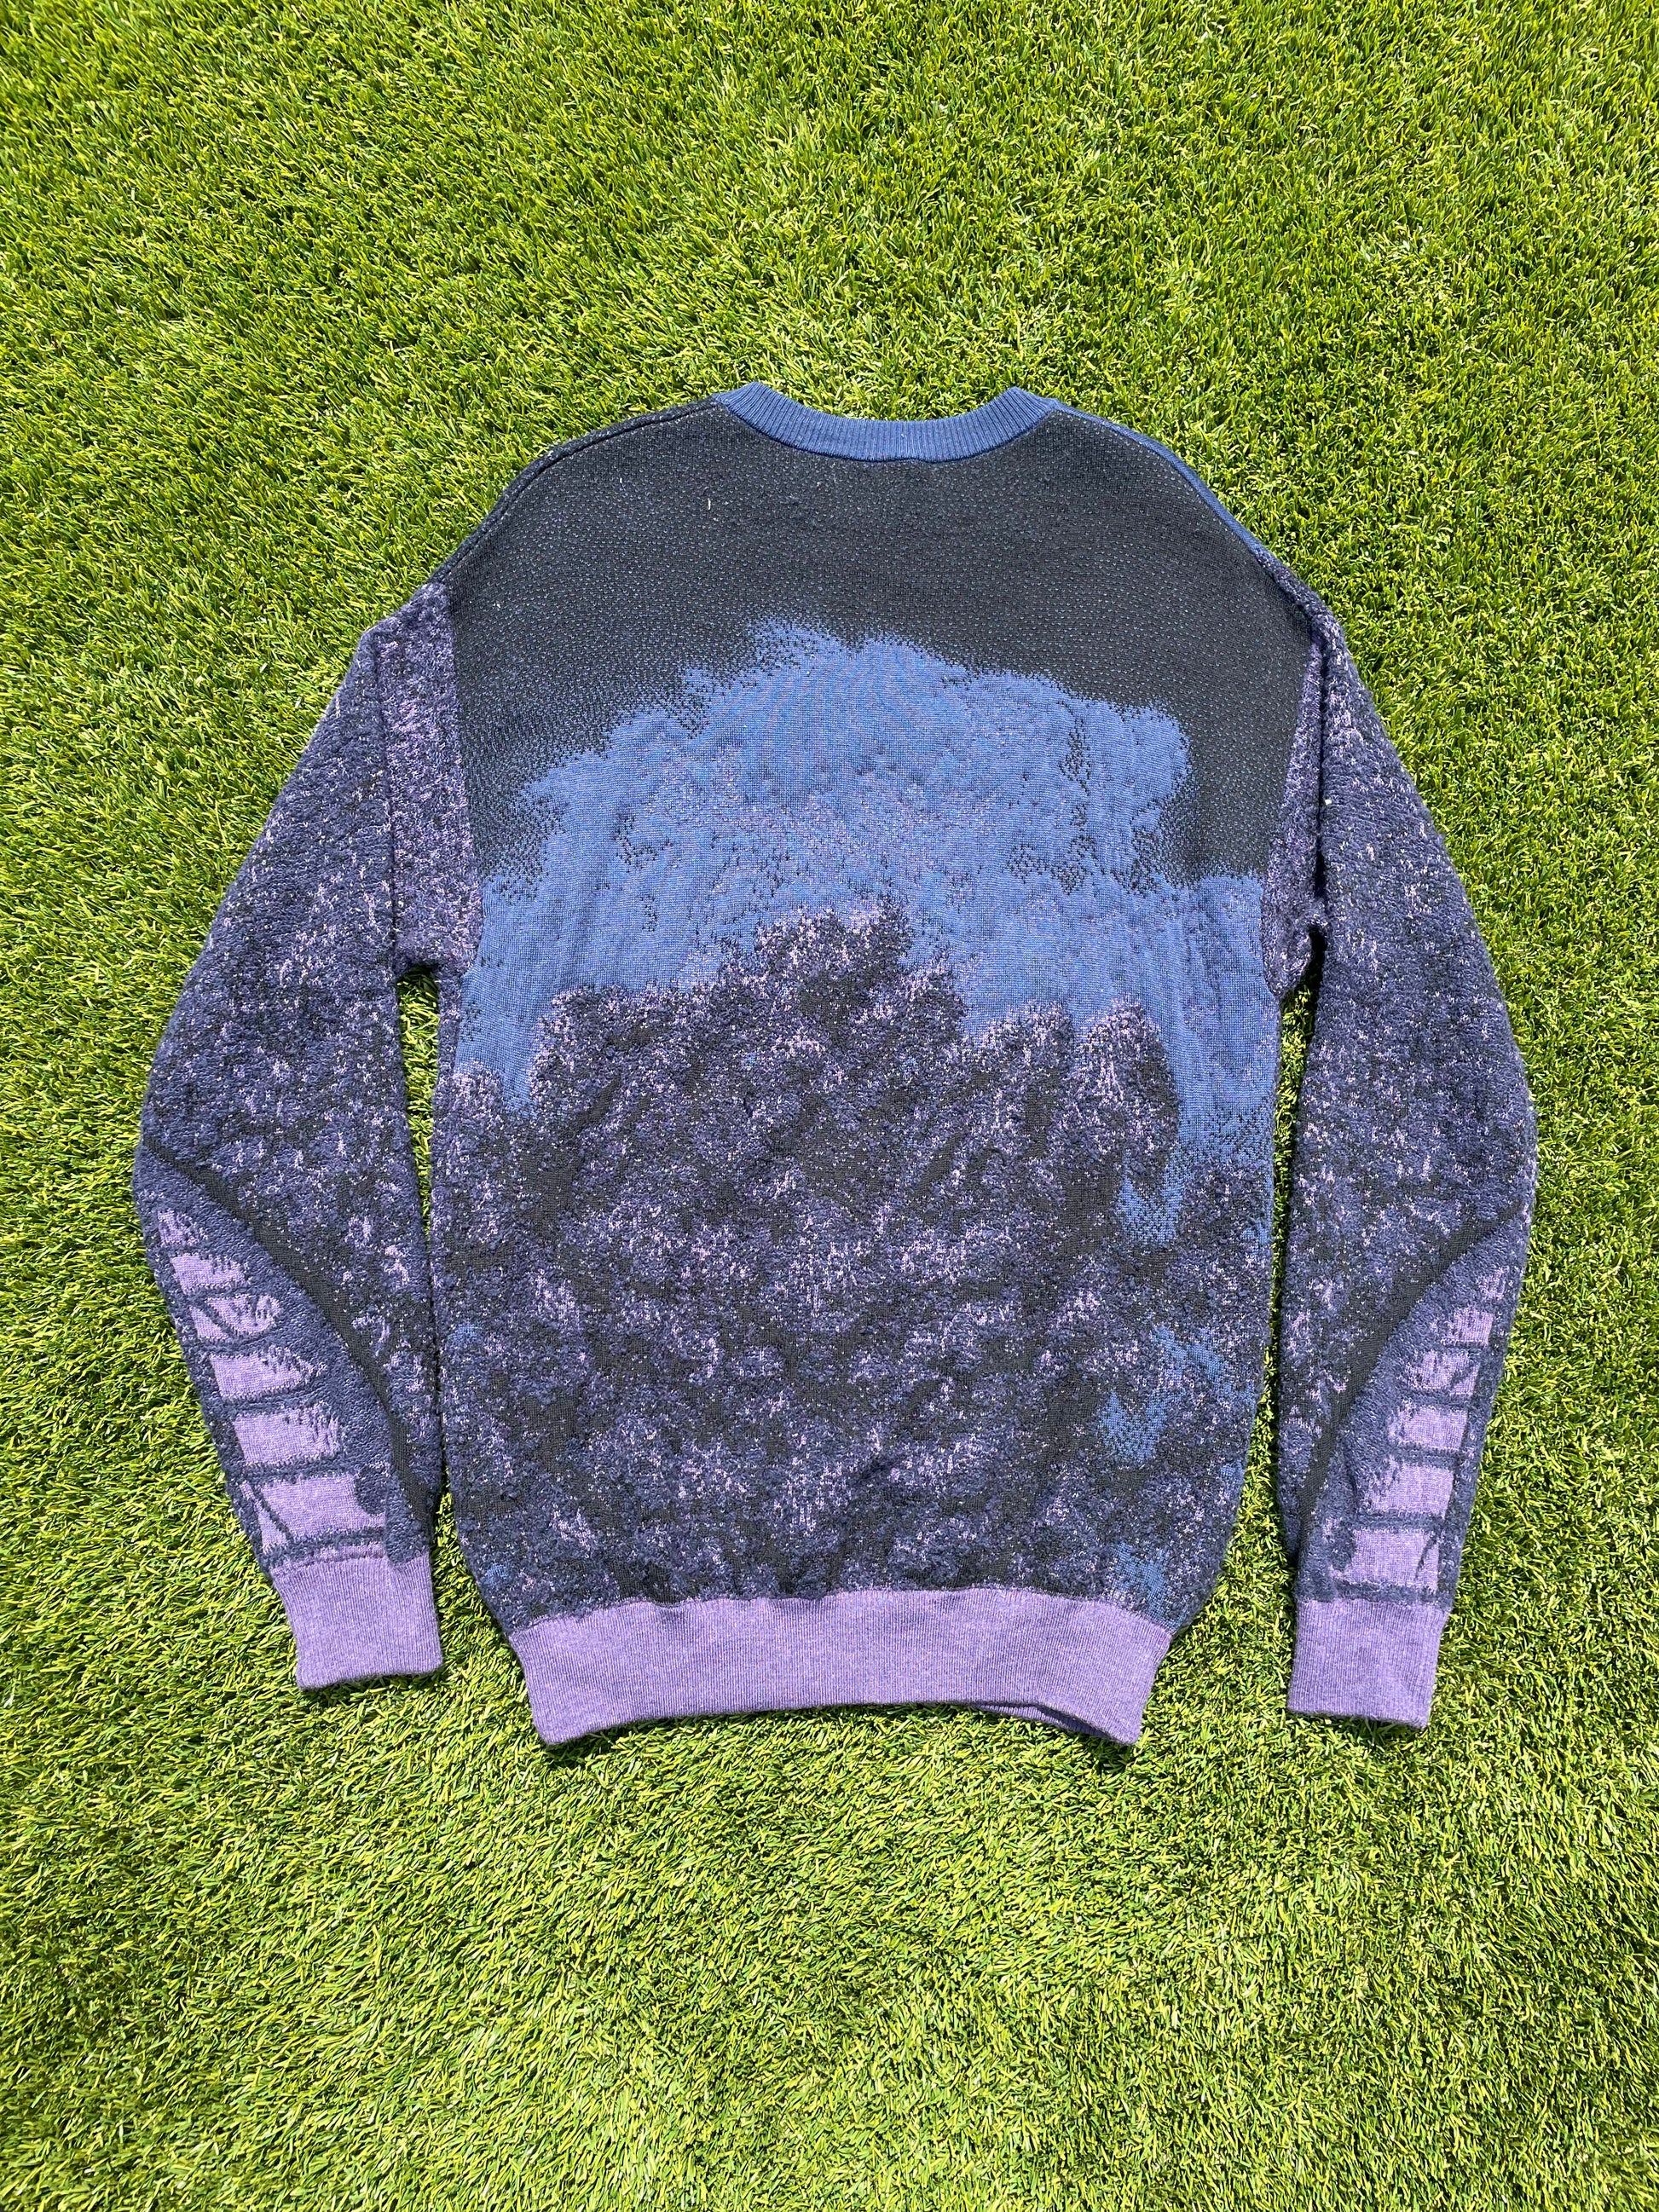 SS19 Louis Vuitton 'Wizard of Oz' Rainbow Walk Knitted Sweater